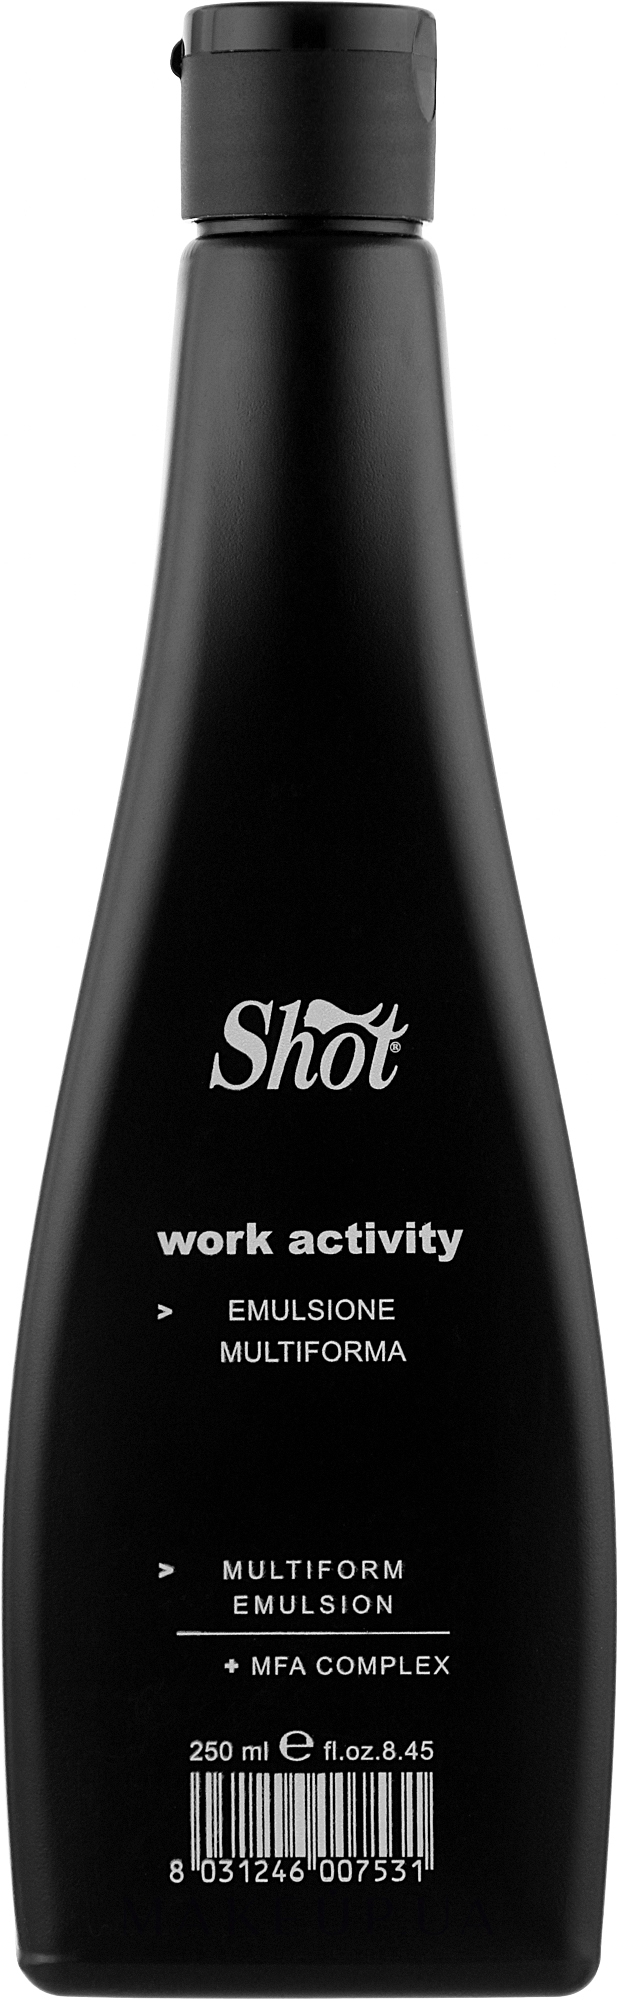 Емульсія для гладенької зачіски - Shot Work Activity Multiform Emulsion — фото 250ml